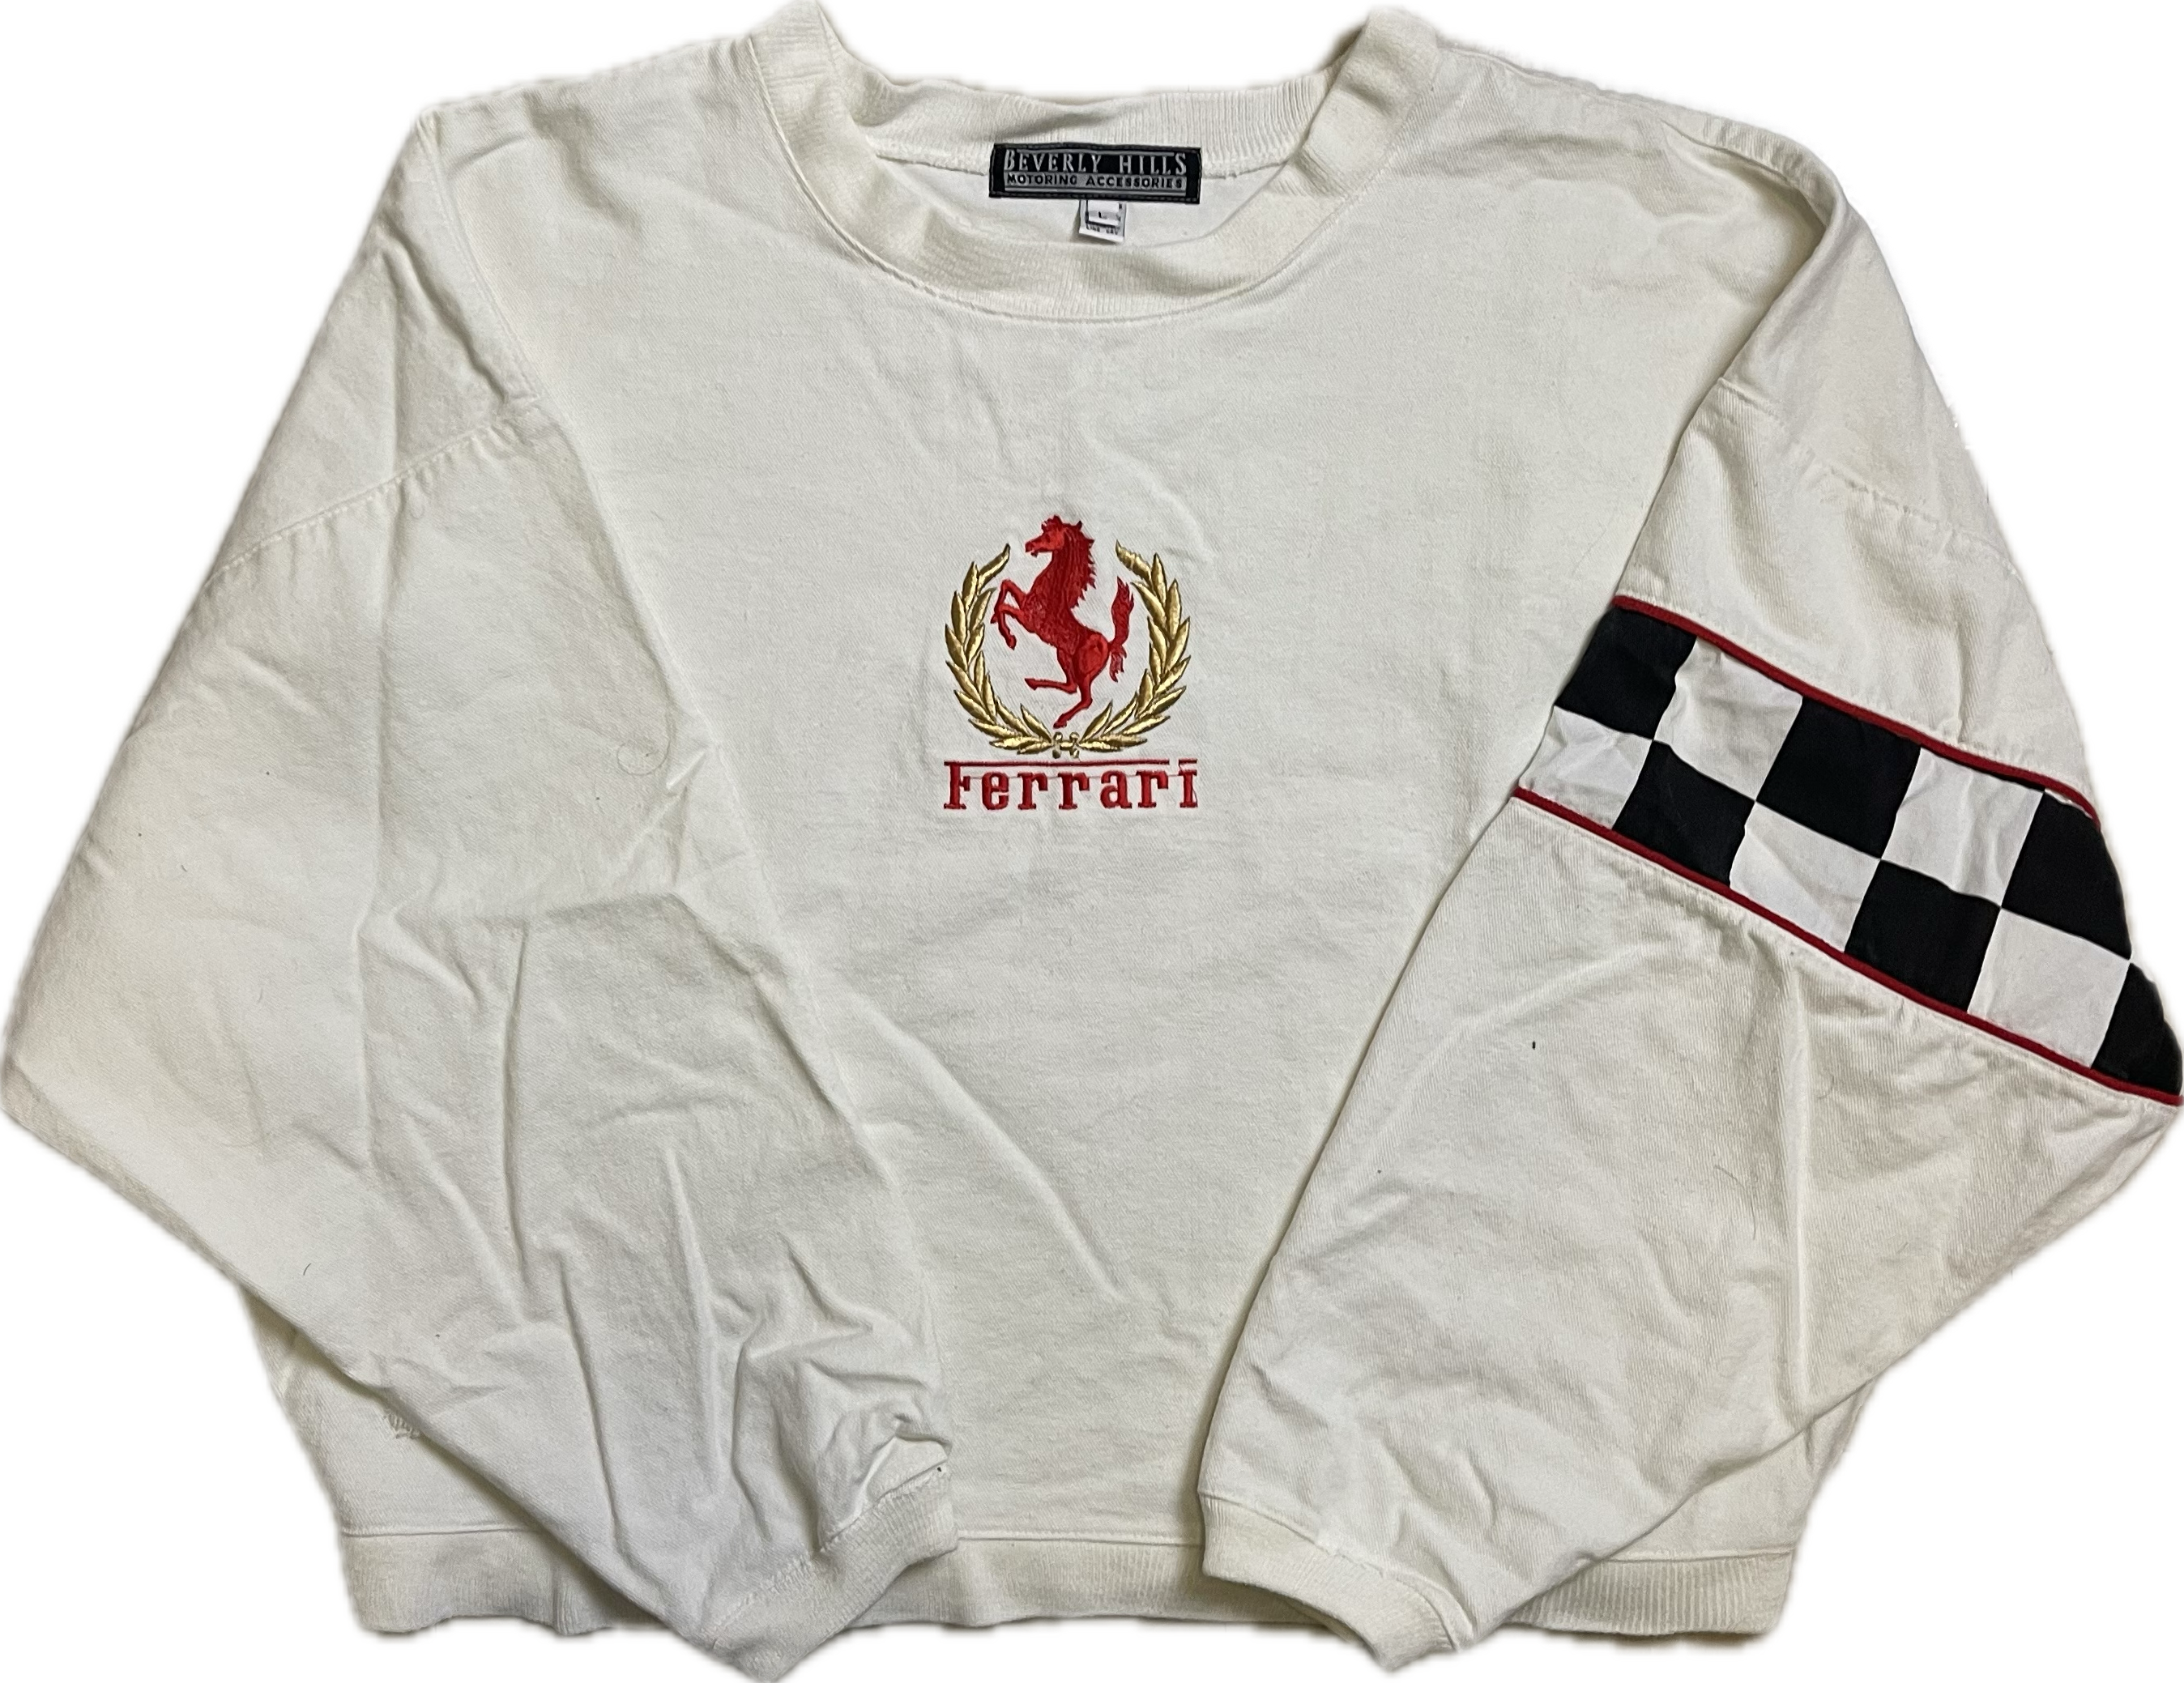 Vintage Ferrari Sweater